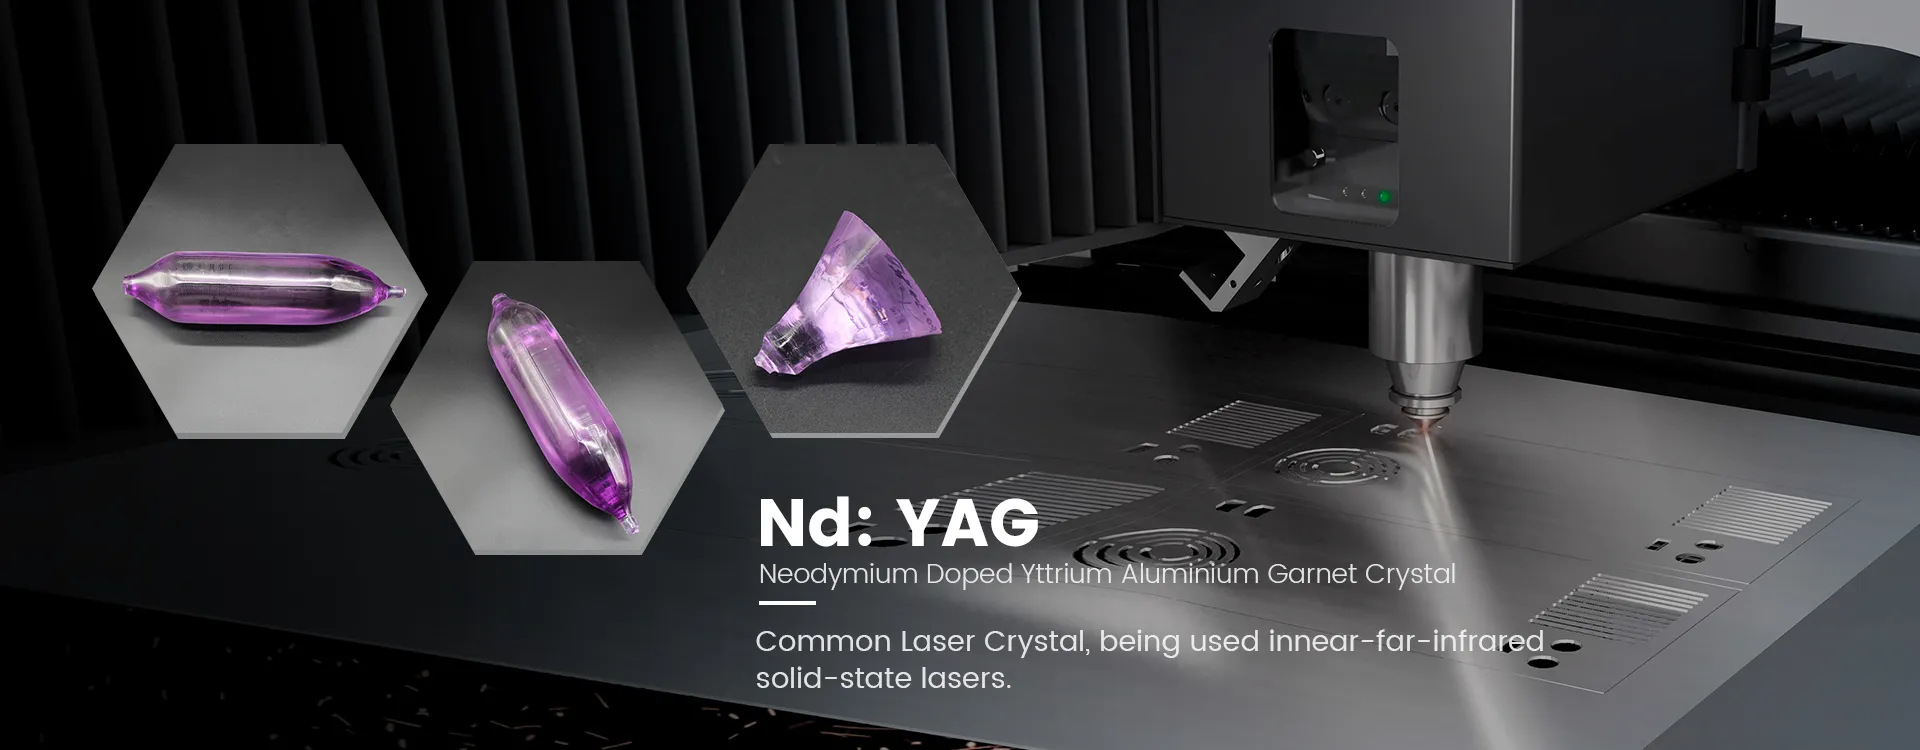 Nd:YAG Crystal